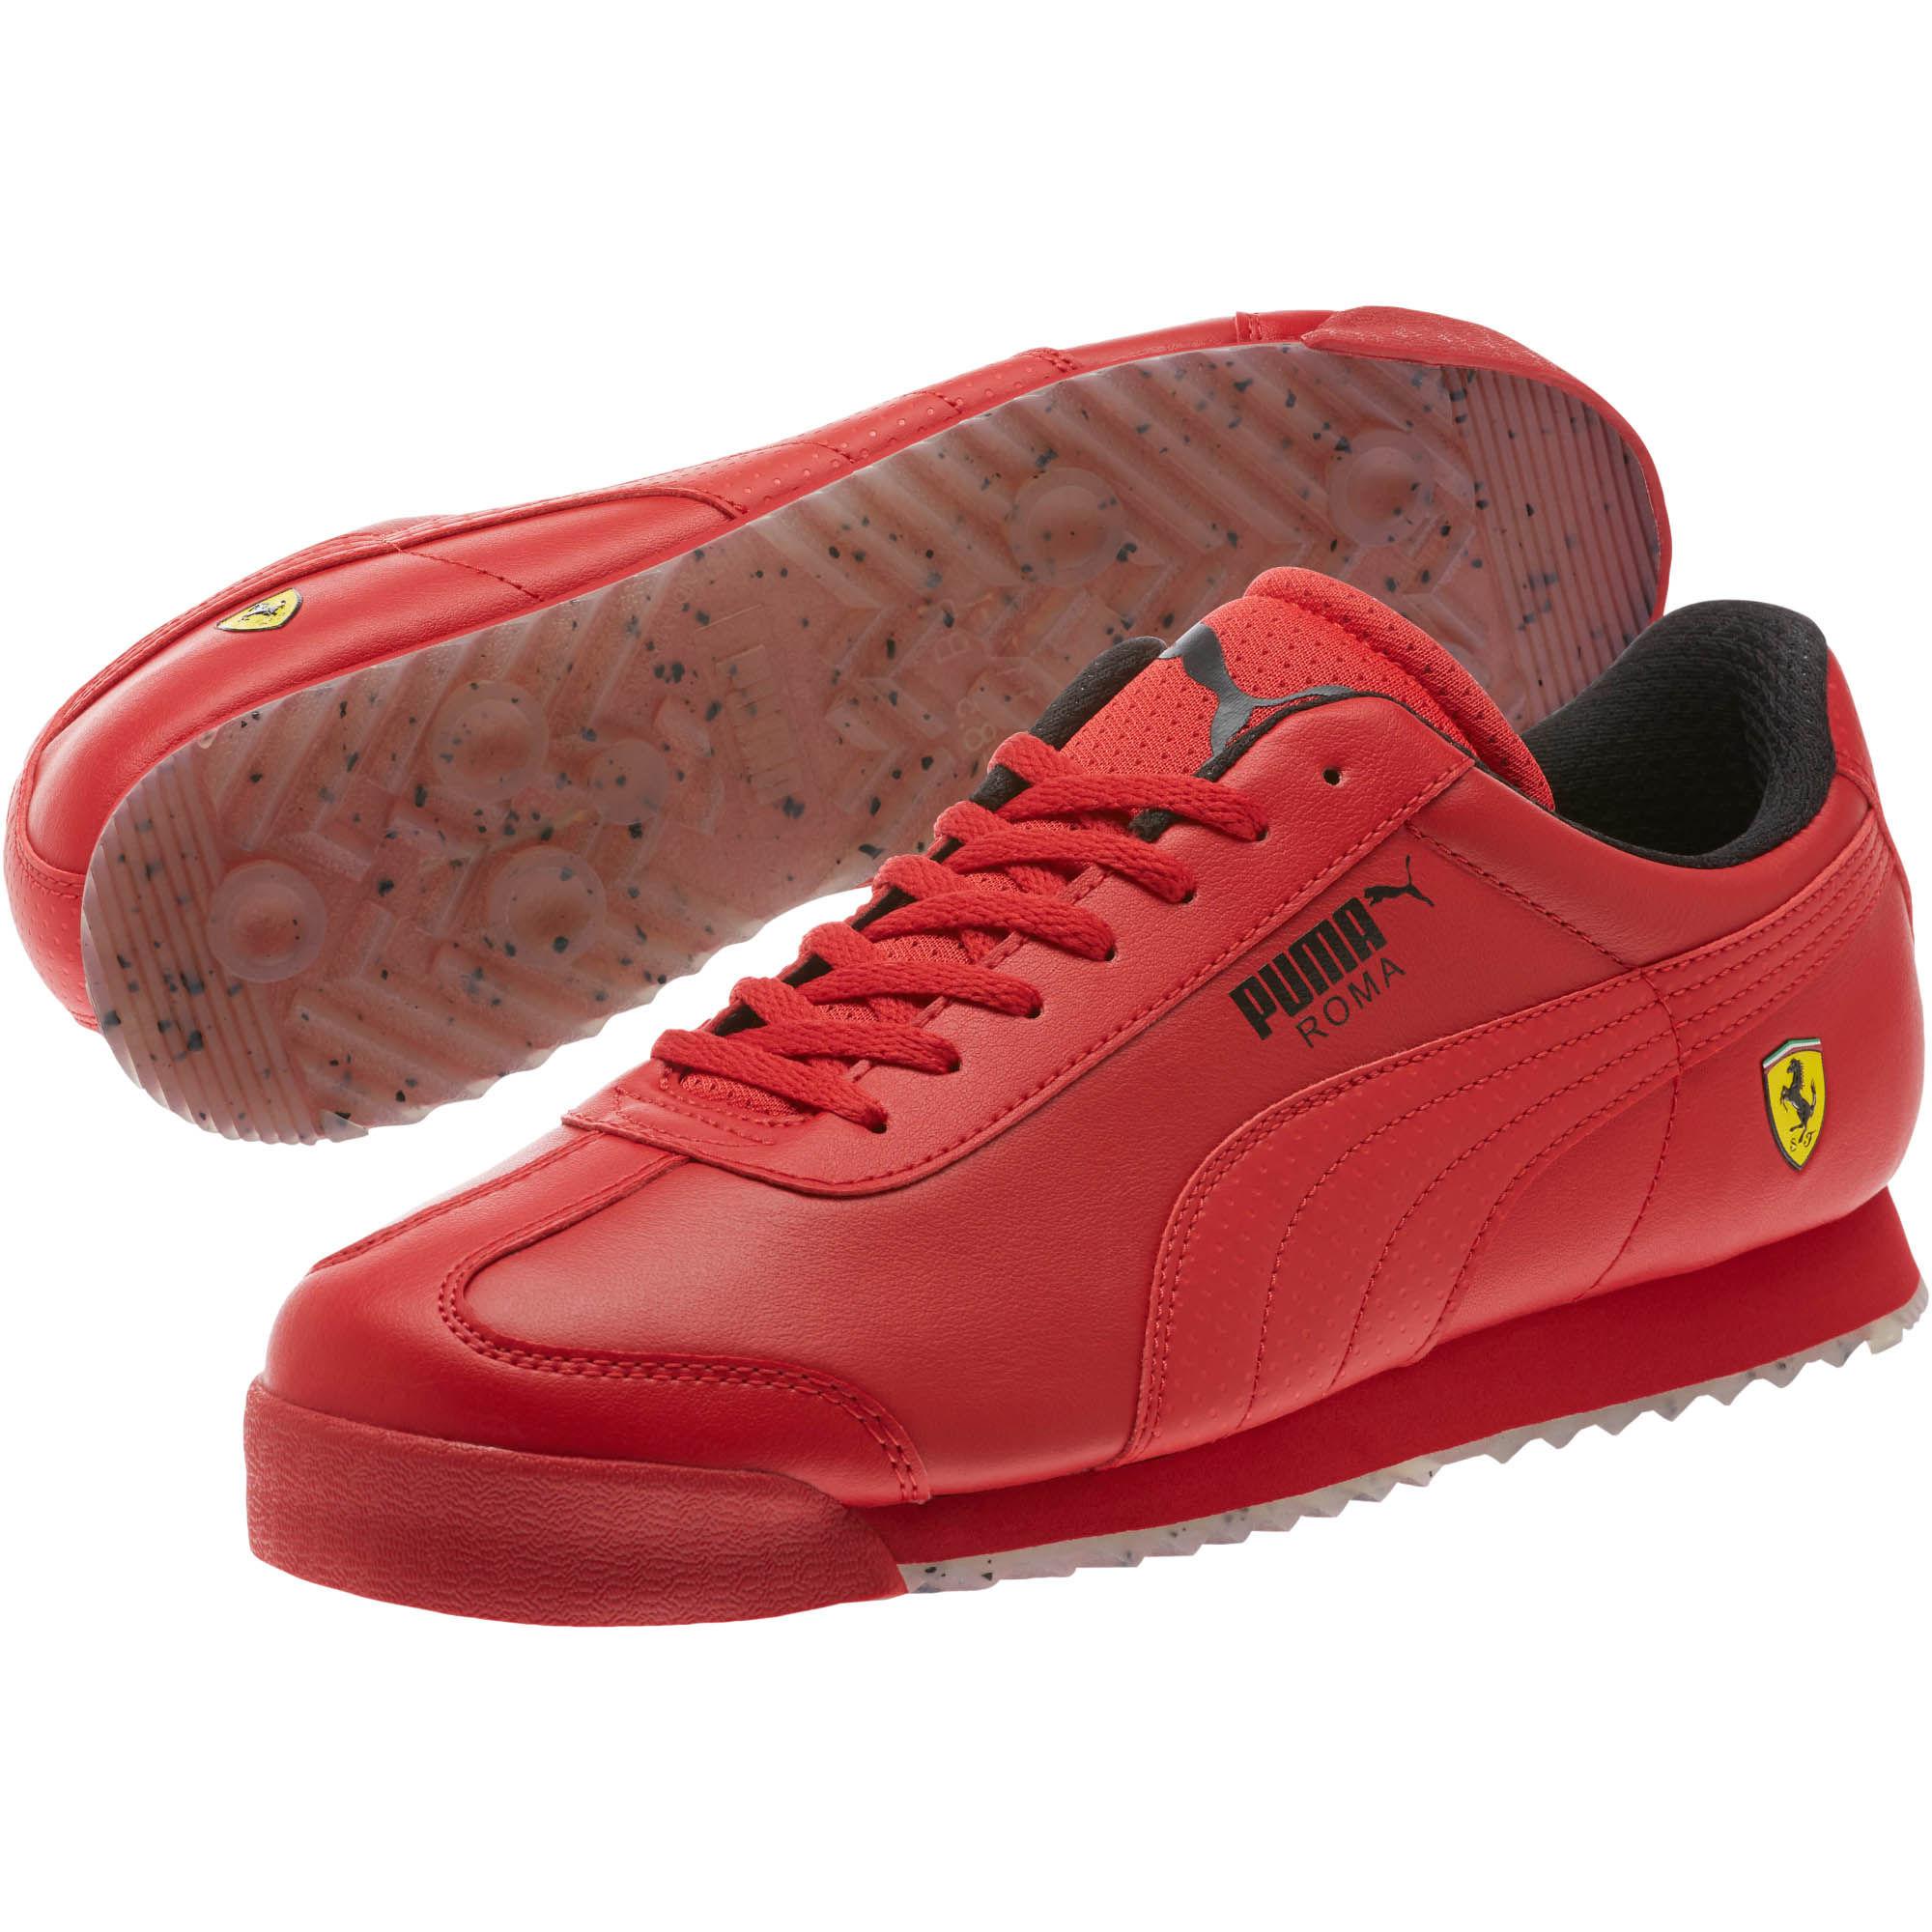 Lyst - Puma Ferrari Roma Men's Sneakers in Red for Men